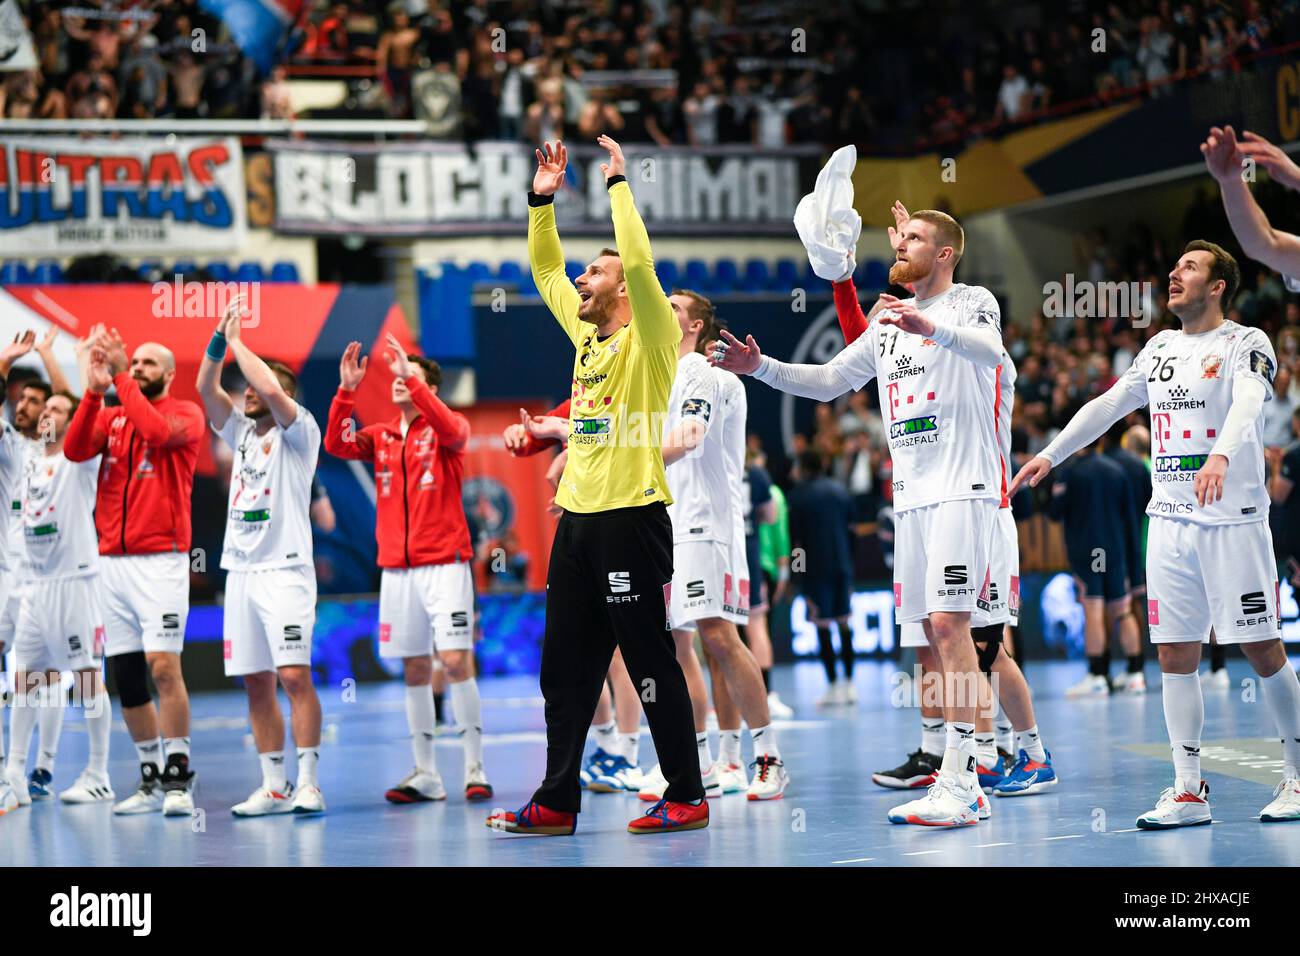 Vladimir Cupara and the team of Telekom Veszprem celebrate the victory during a timeout during the EHF Champions League, Group Phase handball match between Paris Saint-Germain (PSG) Handball and Telekom Veszprem (KSE)